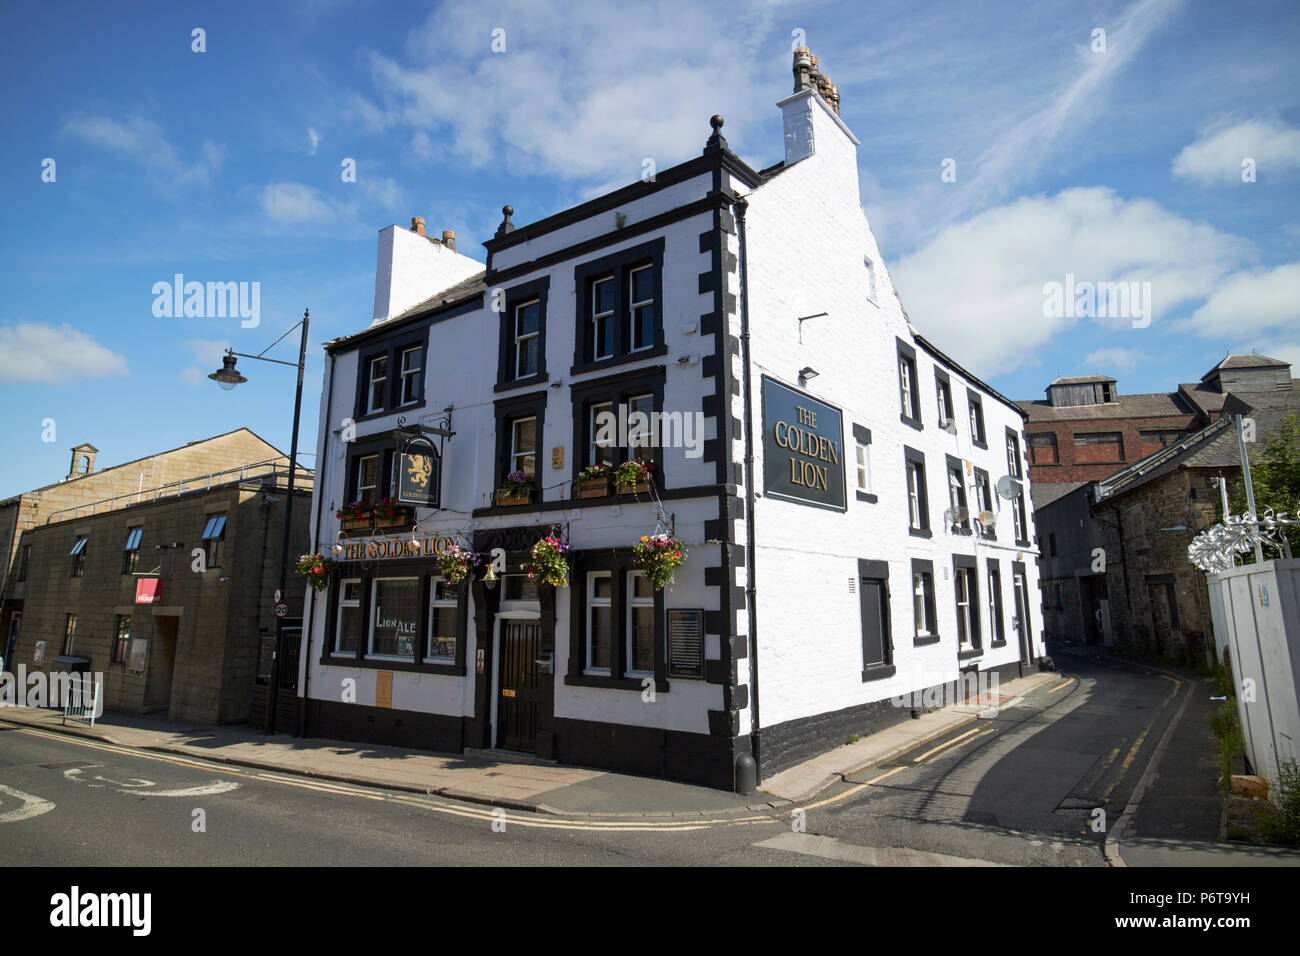 The golden lion historic pub england uk Stock Photo